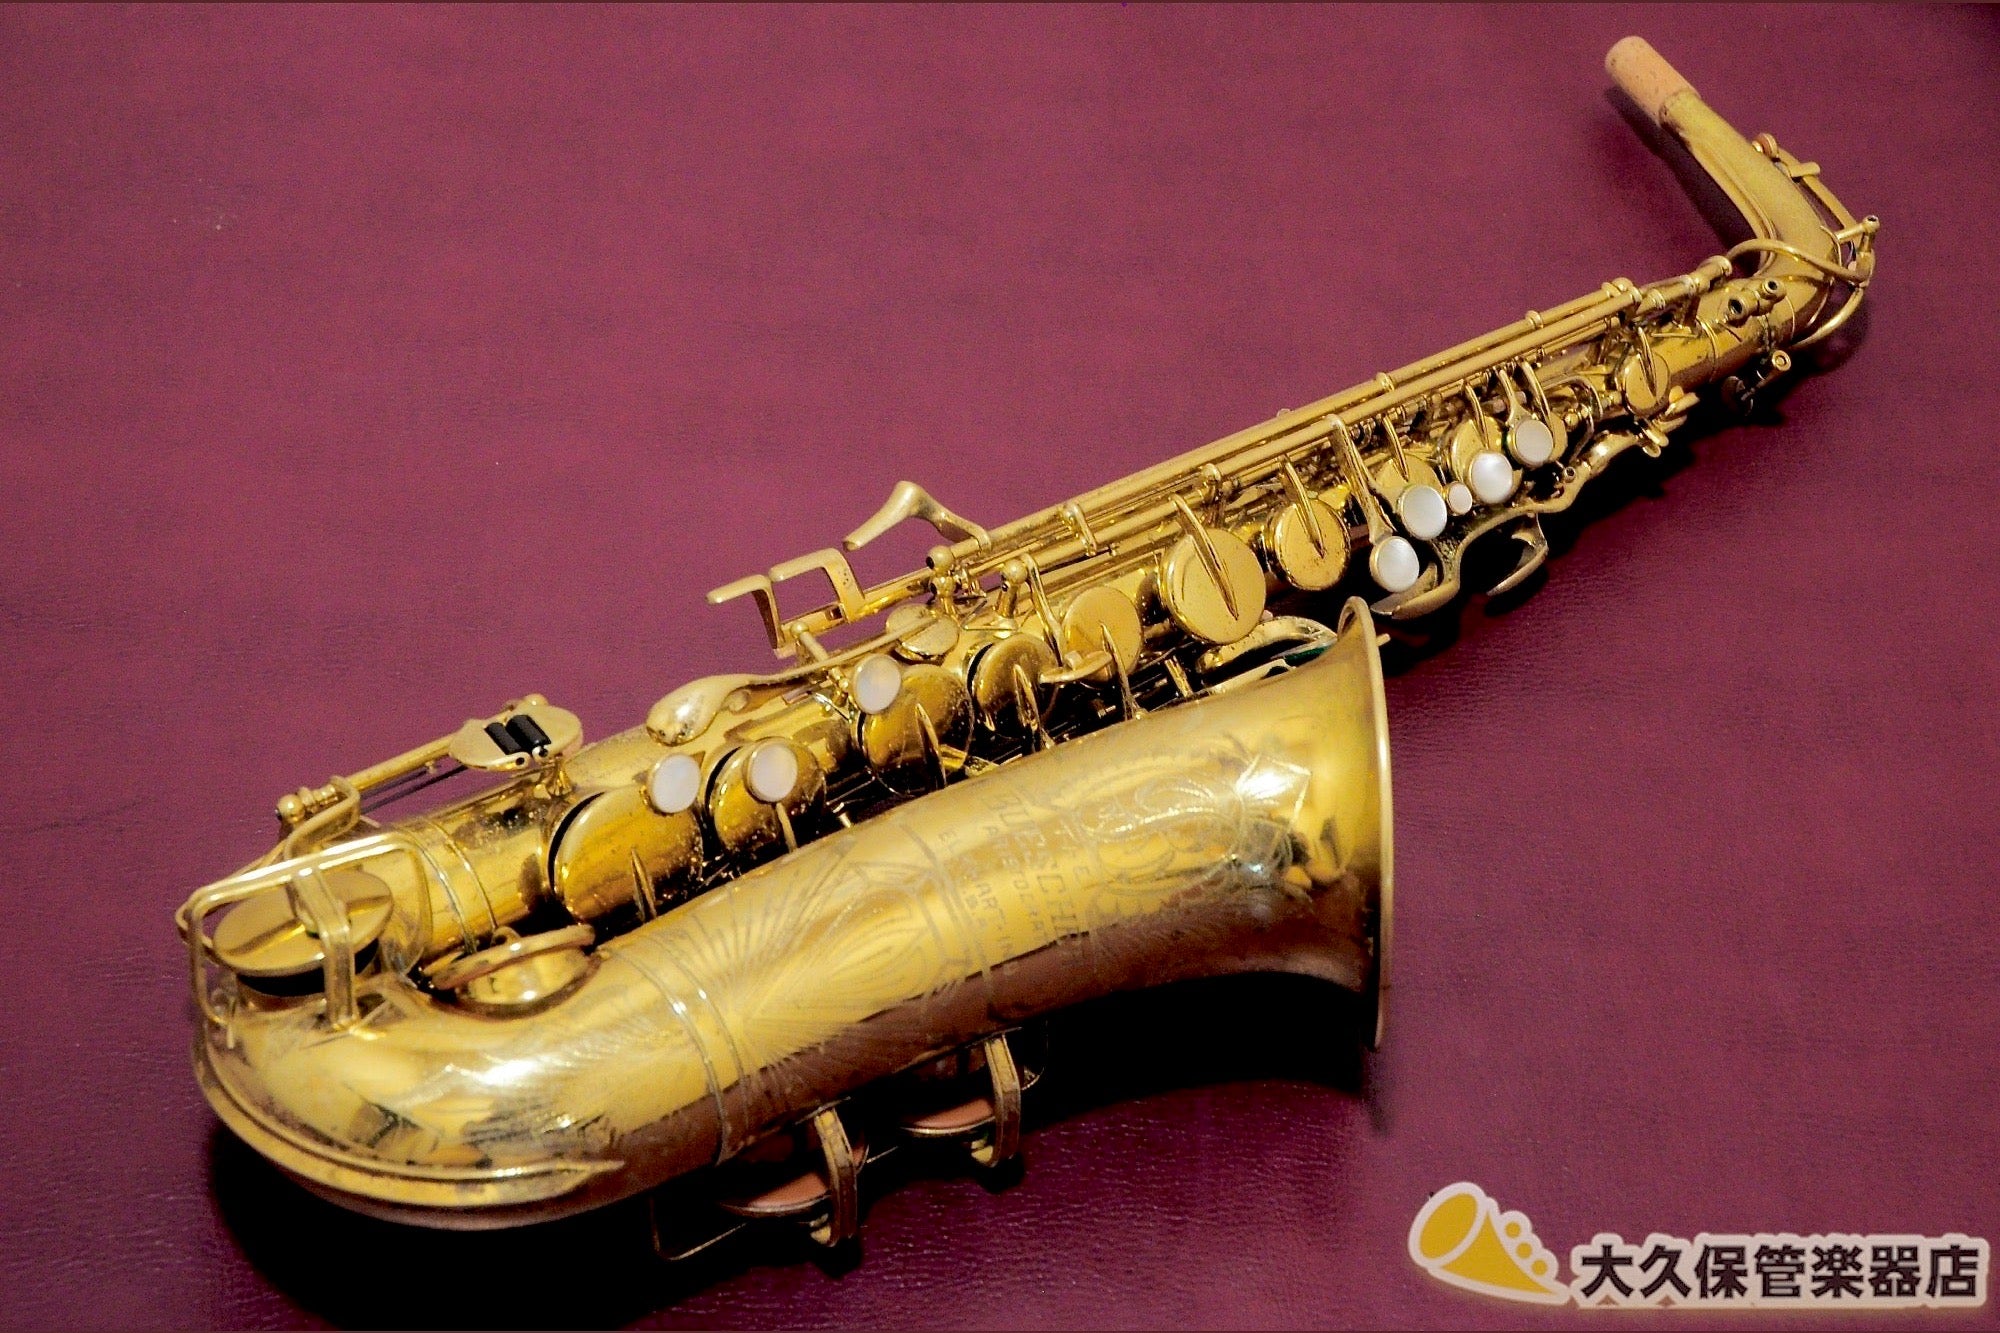 Buscher Aristcrat II "Big B" 1945 vintage alto saxophone